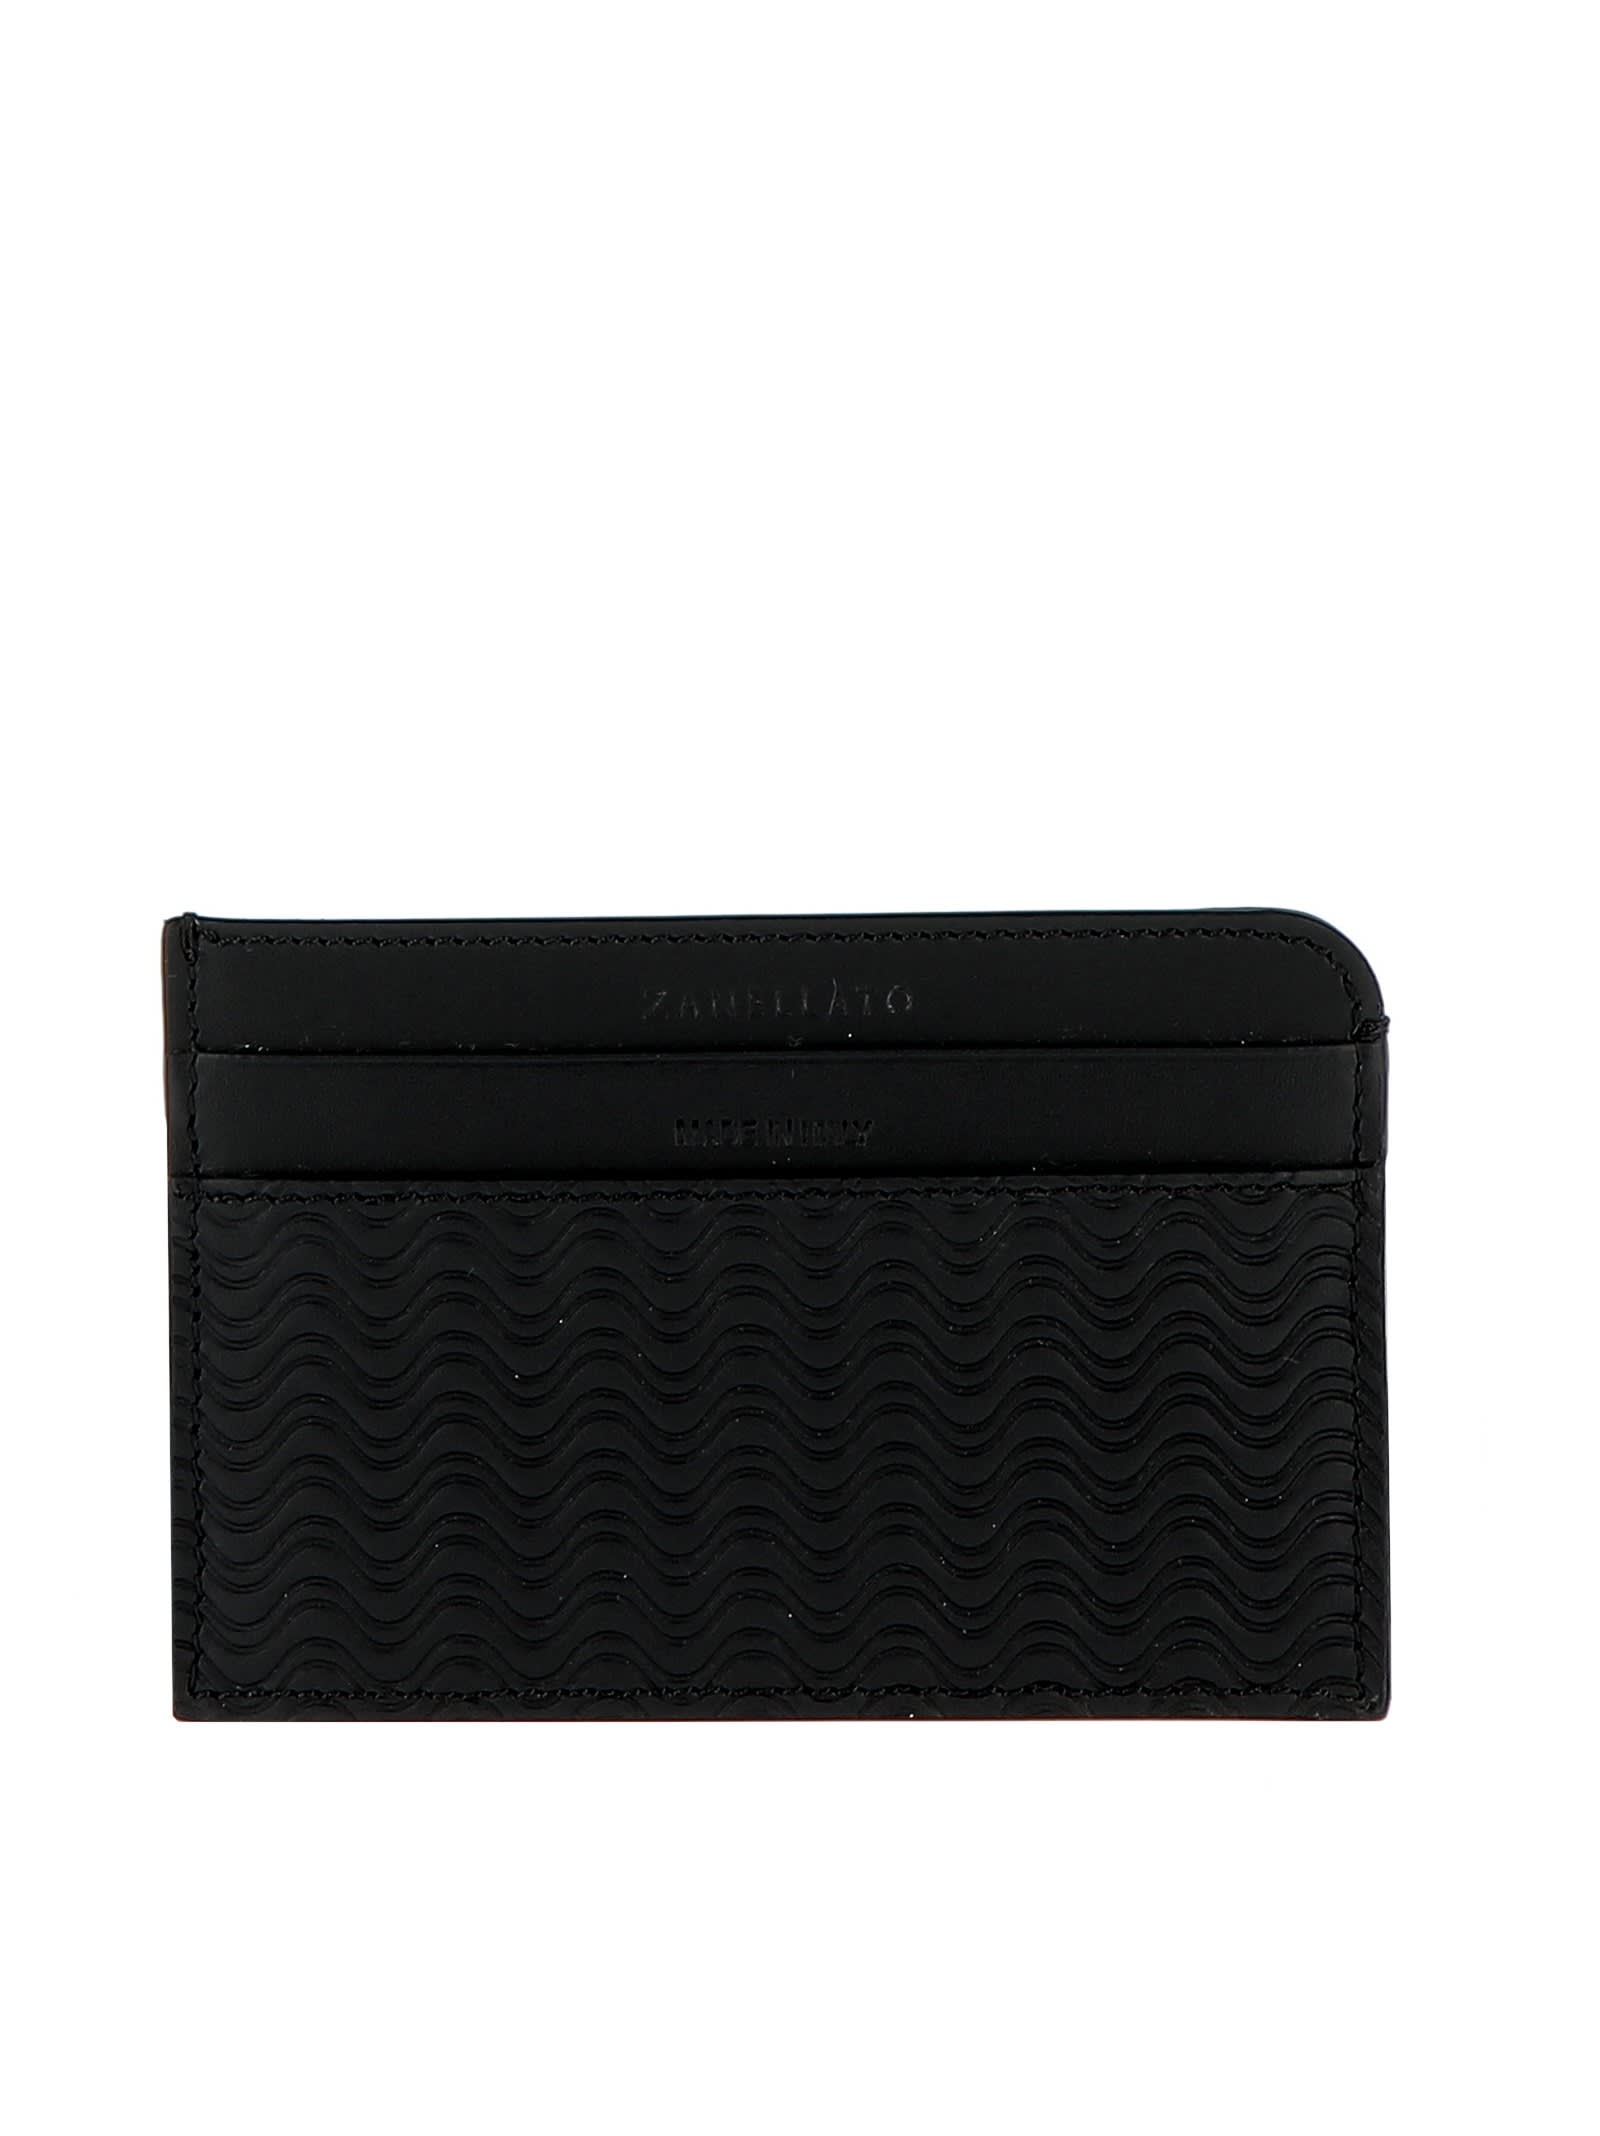 Zanellato Black Leather Wallet In 02 Black